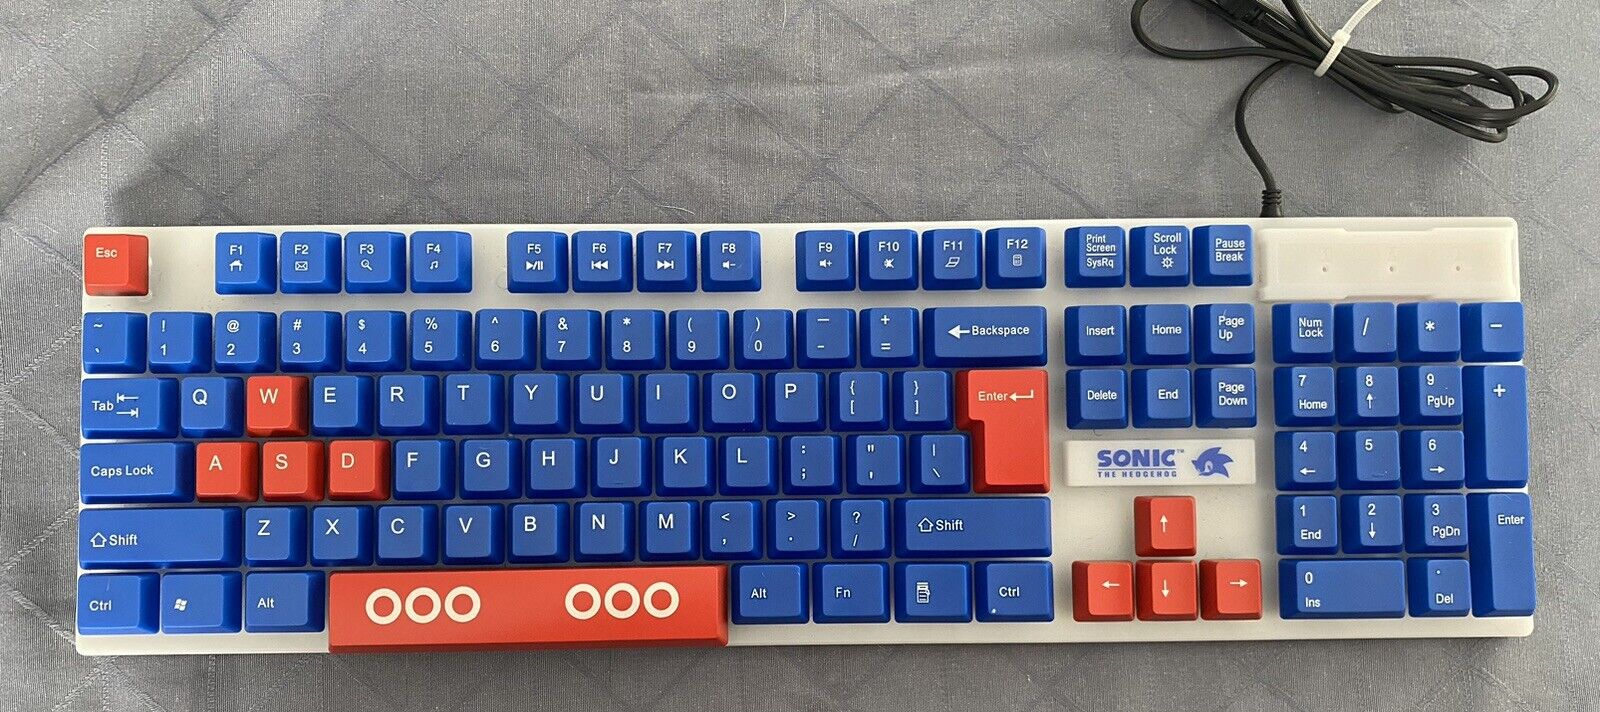 Sonic The Hedgehog gaming Keyboard